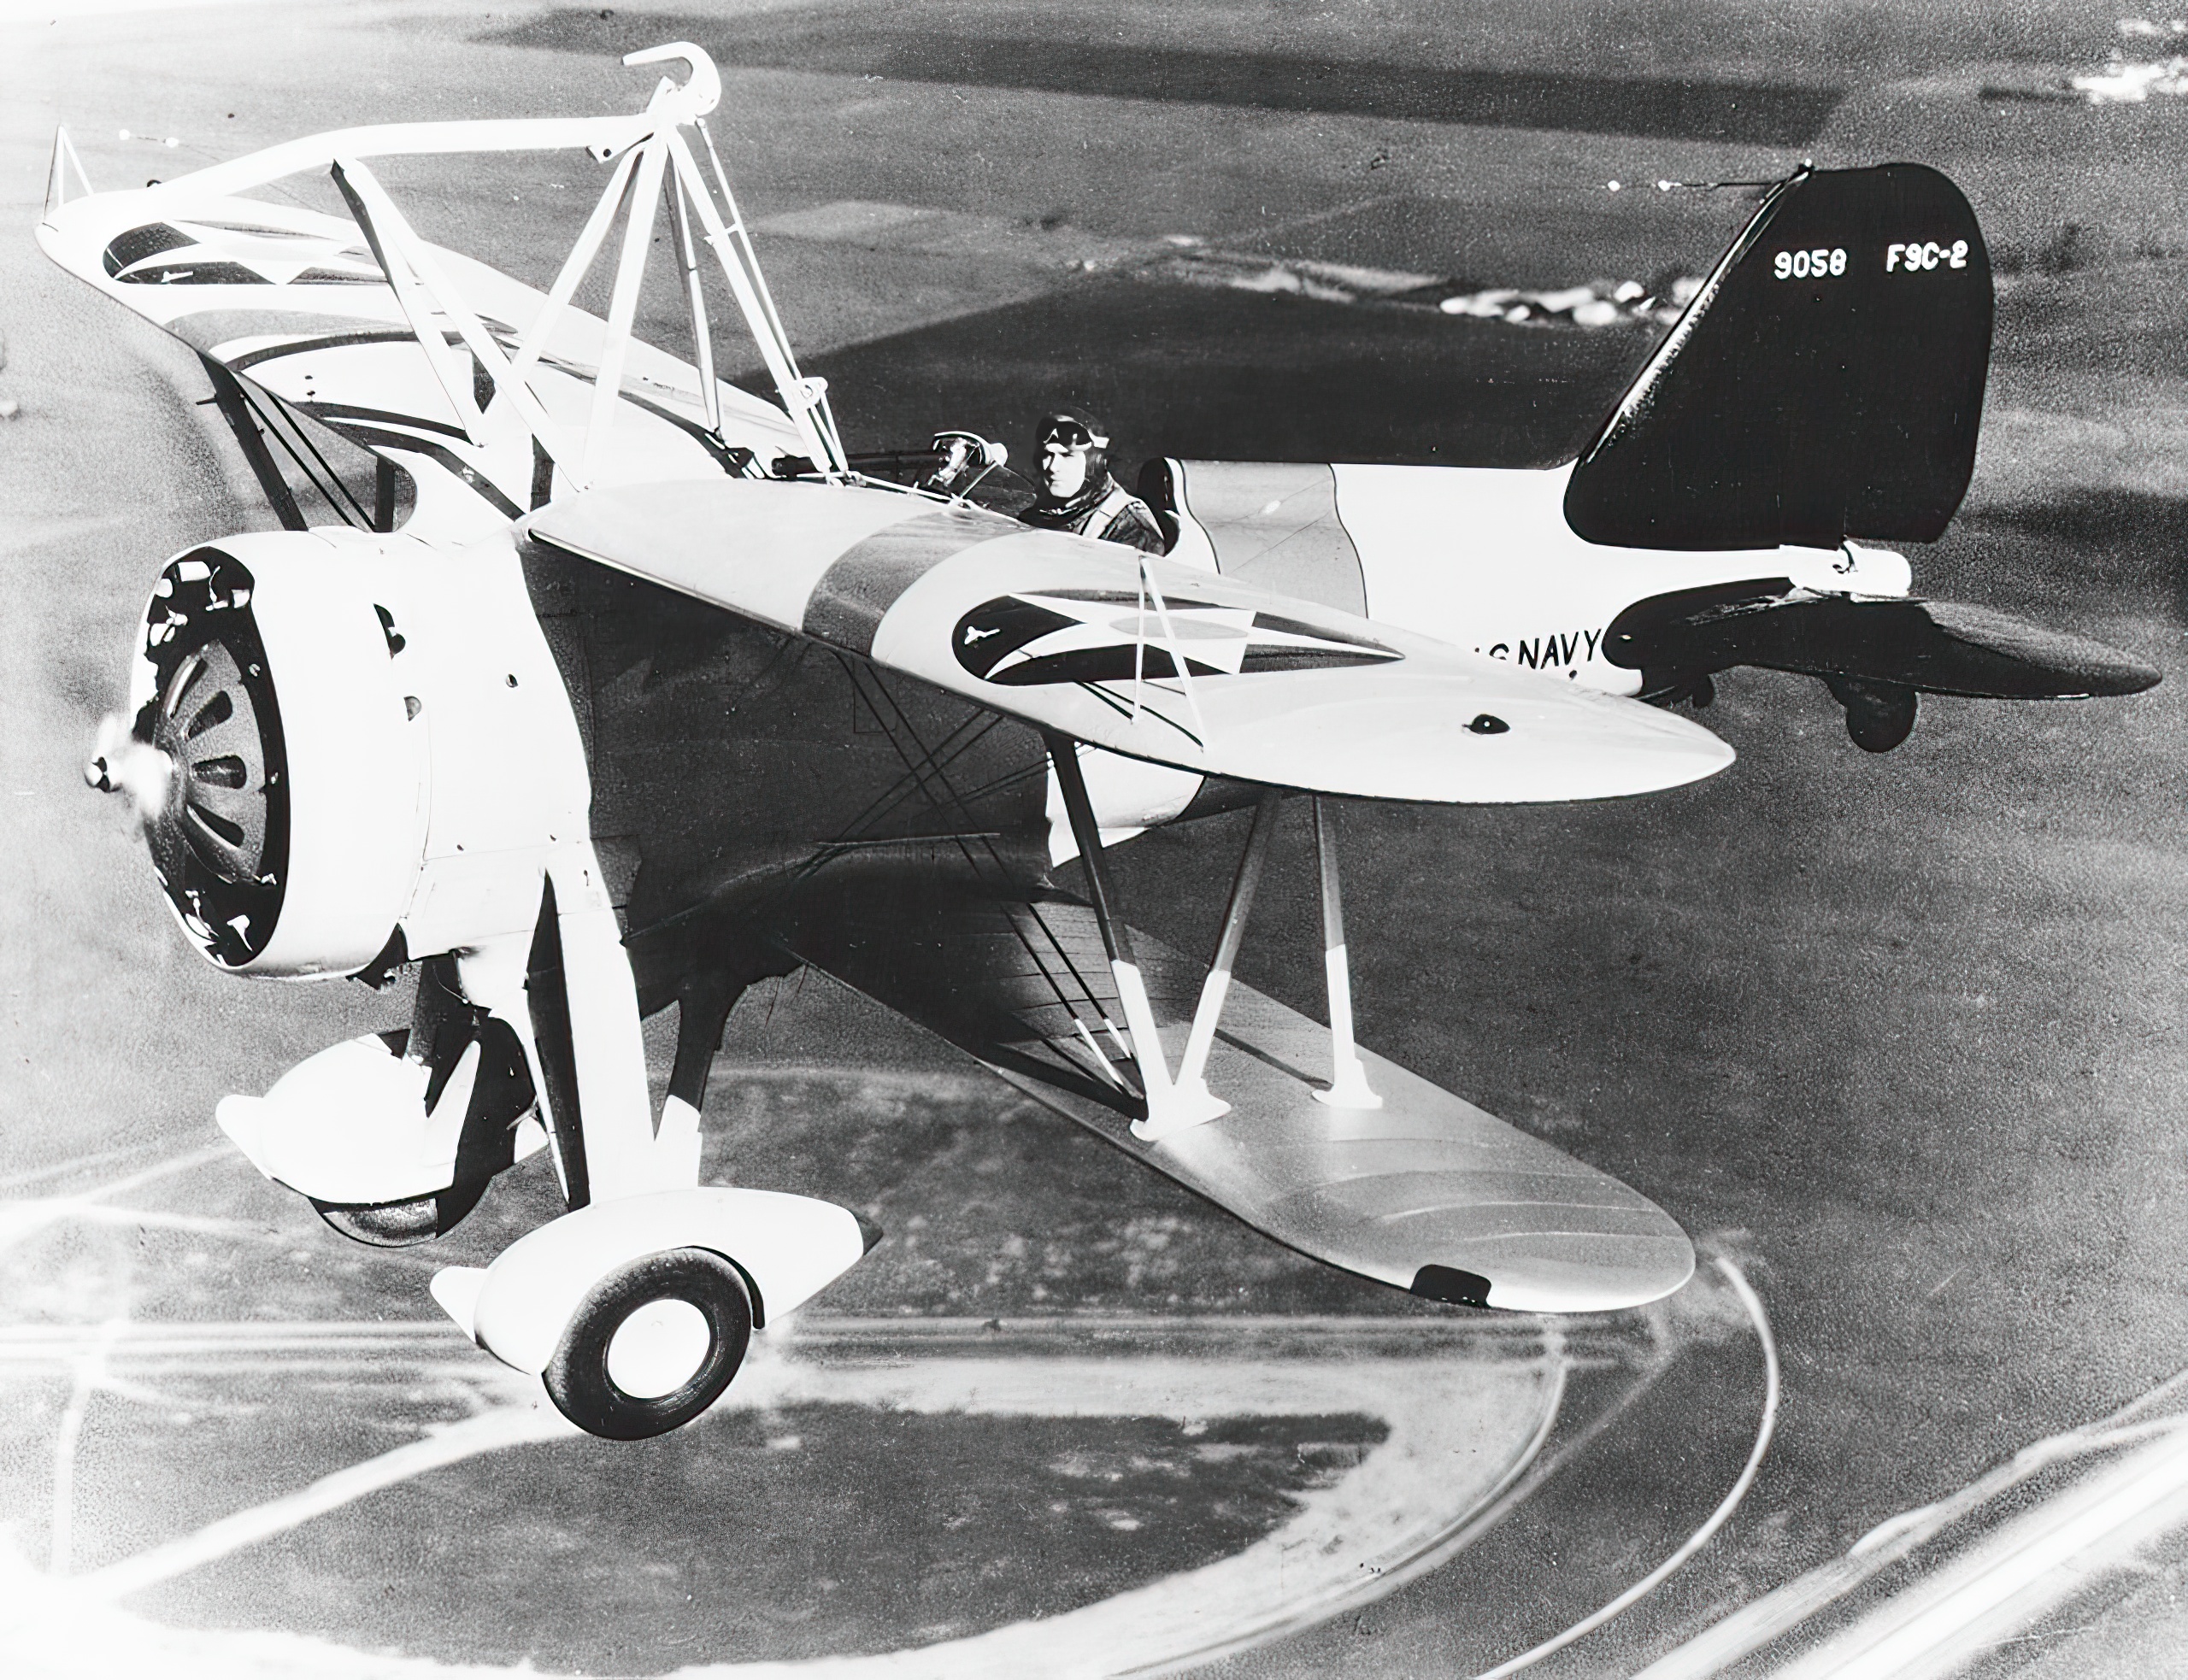 Curtiss F9C-2 Sparrowhawk (BuNo 9058) in flight over Moffett Field, California in 1934